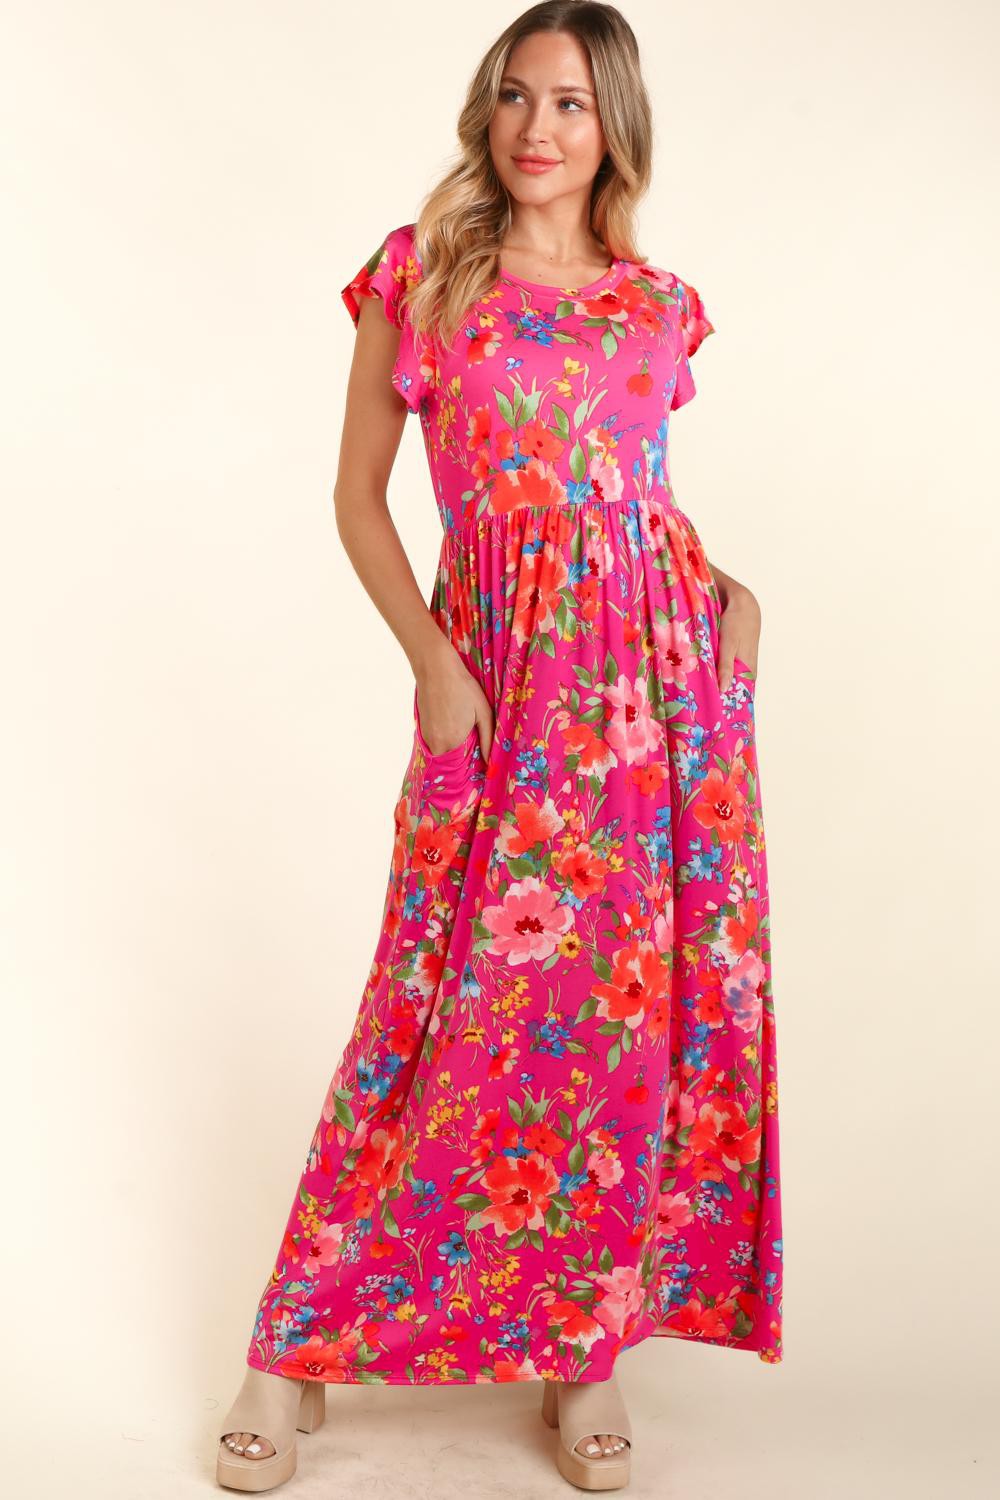 Hazel Blues® |  Haptics Floral Ruffled Round Neck Cap Sleeve Dress